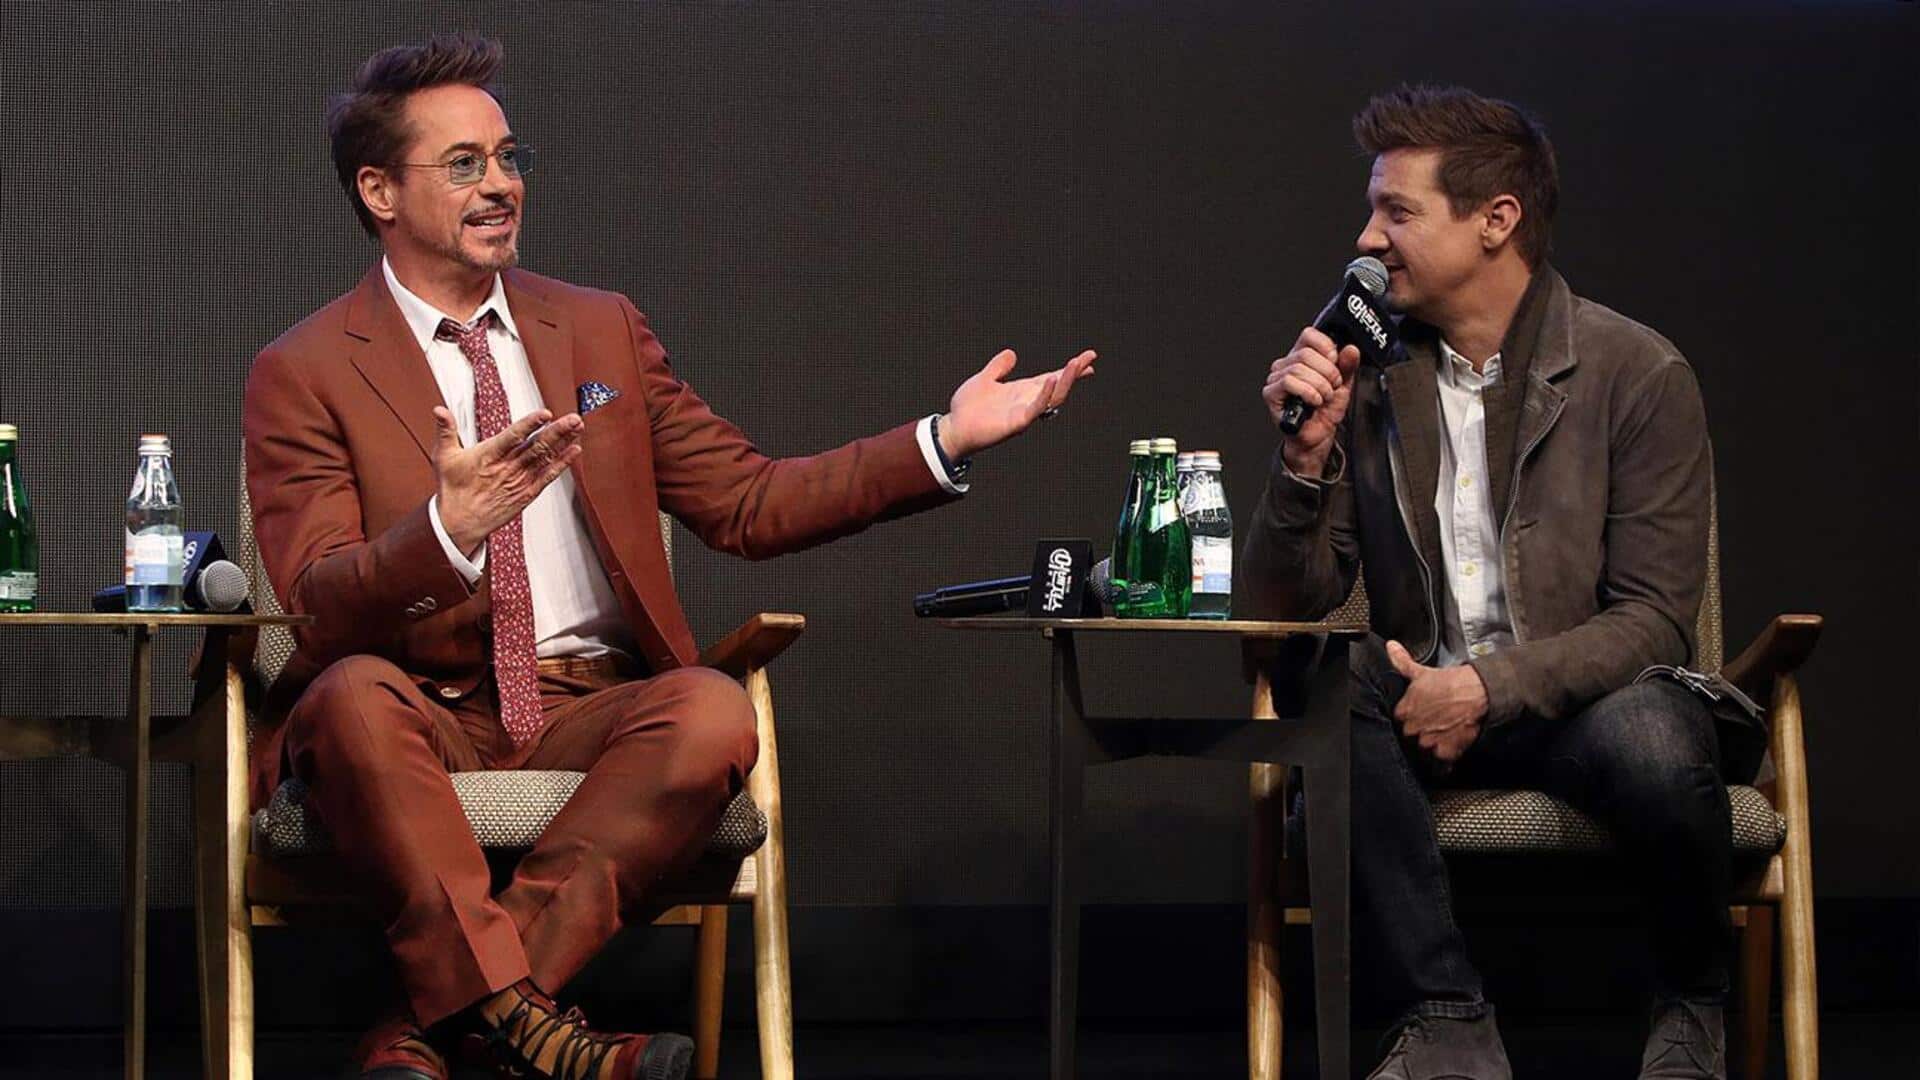 Robert Downey Jr.'s 'great chats' felt like 'dating': Jeremy Renner